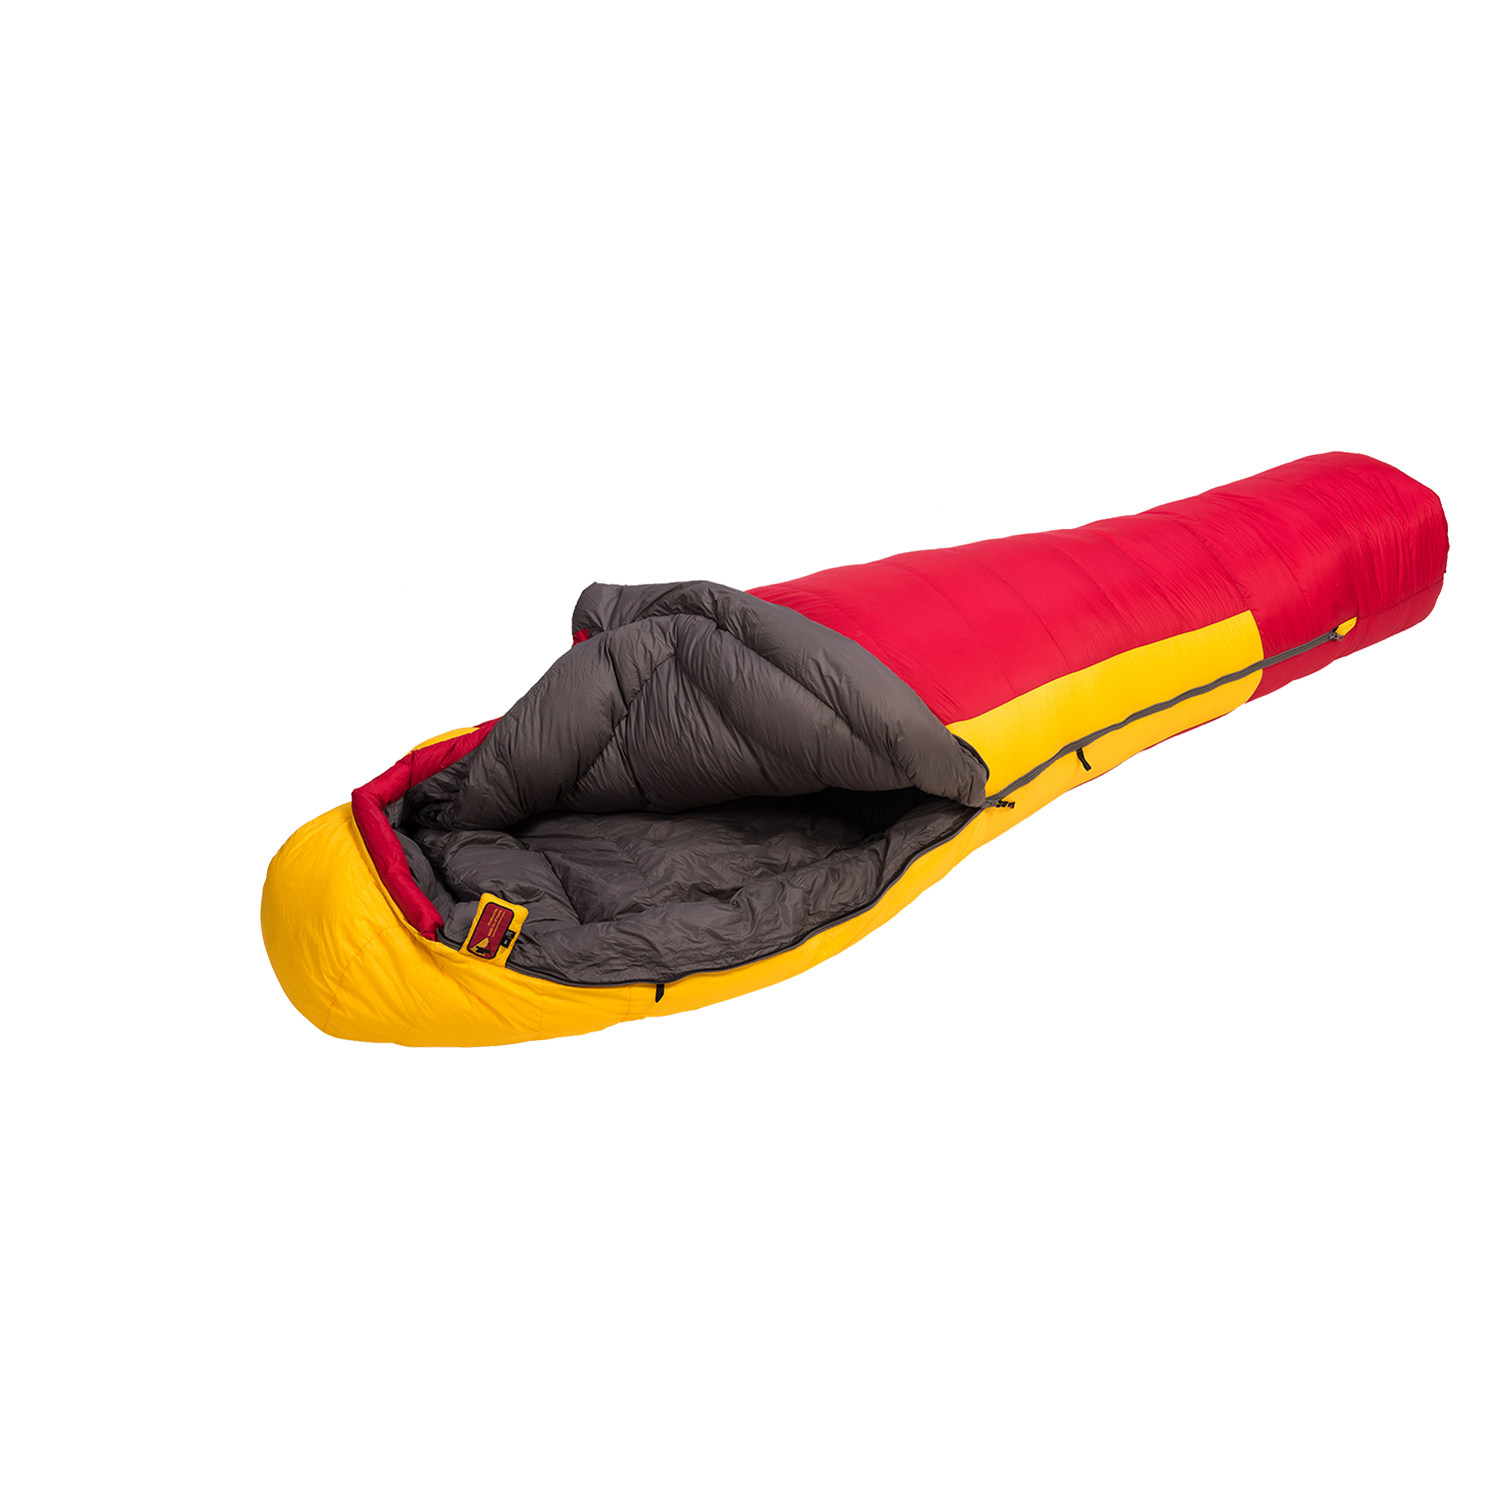 Спальный мешок BASK, размер 23х57, цвет красный 3536-70184-R KARAKORAM-XL 800+FP - фото 2